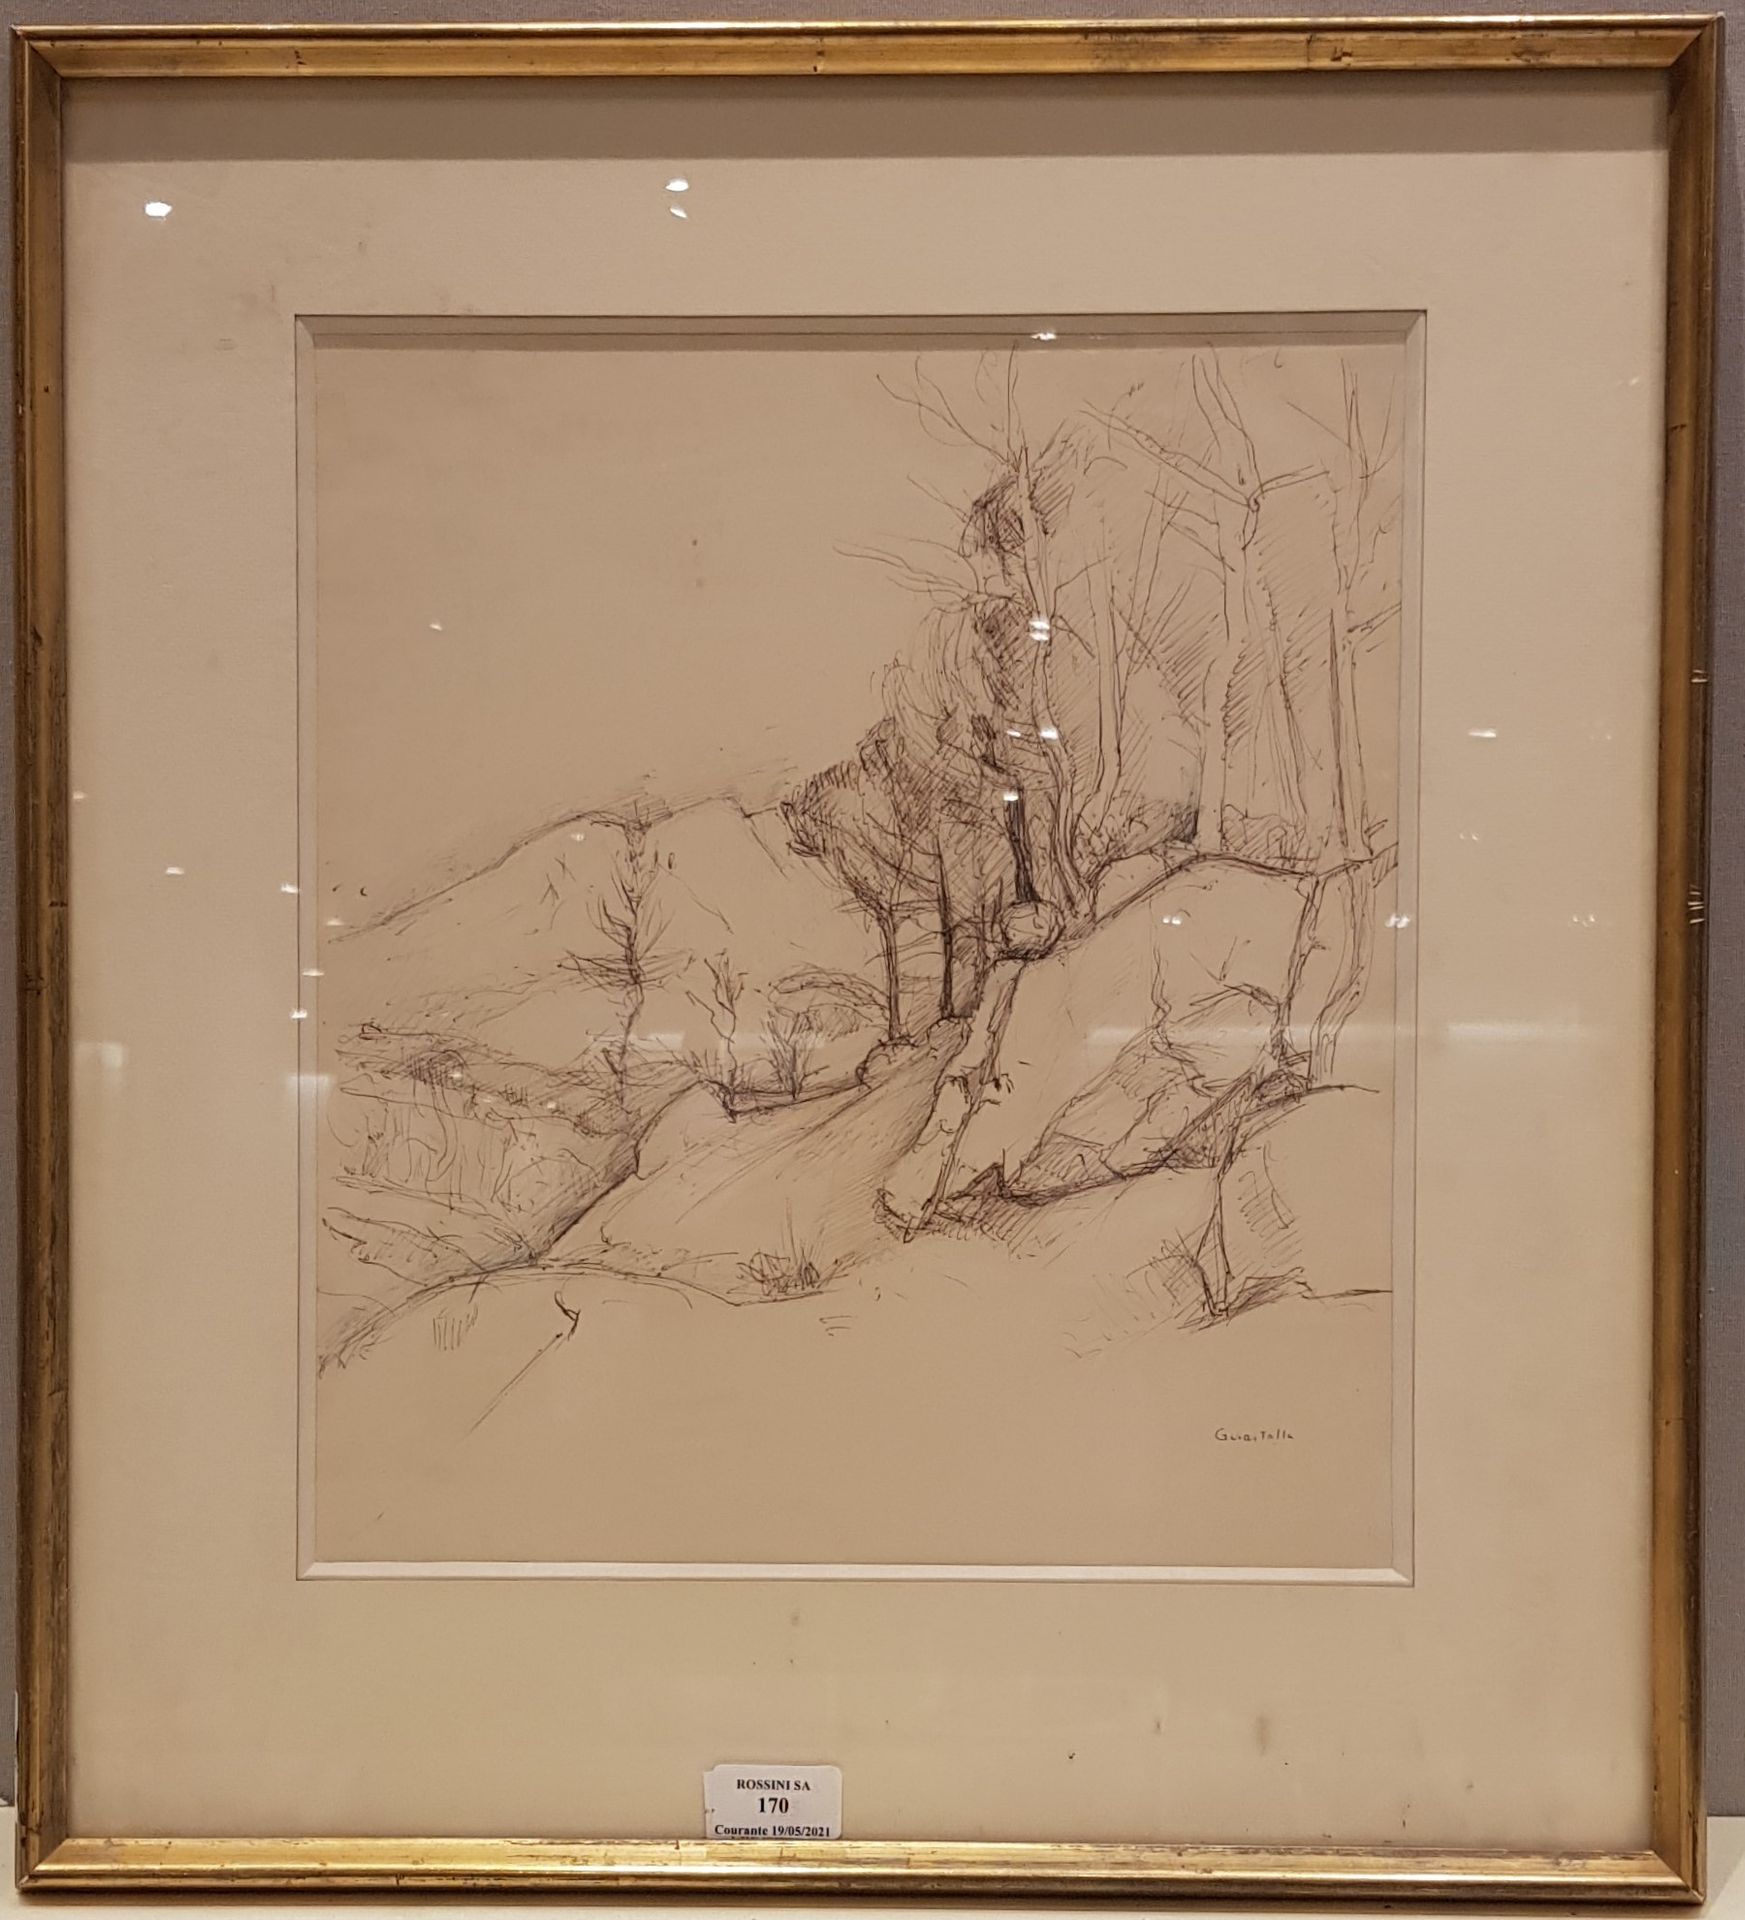 Null 瓜斯塔拉-皮埃尔, 1891-1968

树木和岩石

纸上棕色和黑色墨水（日照），右下方有签名

36x32厘米